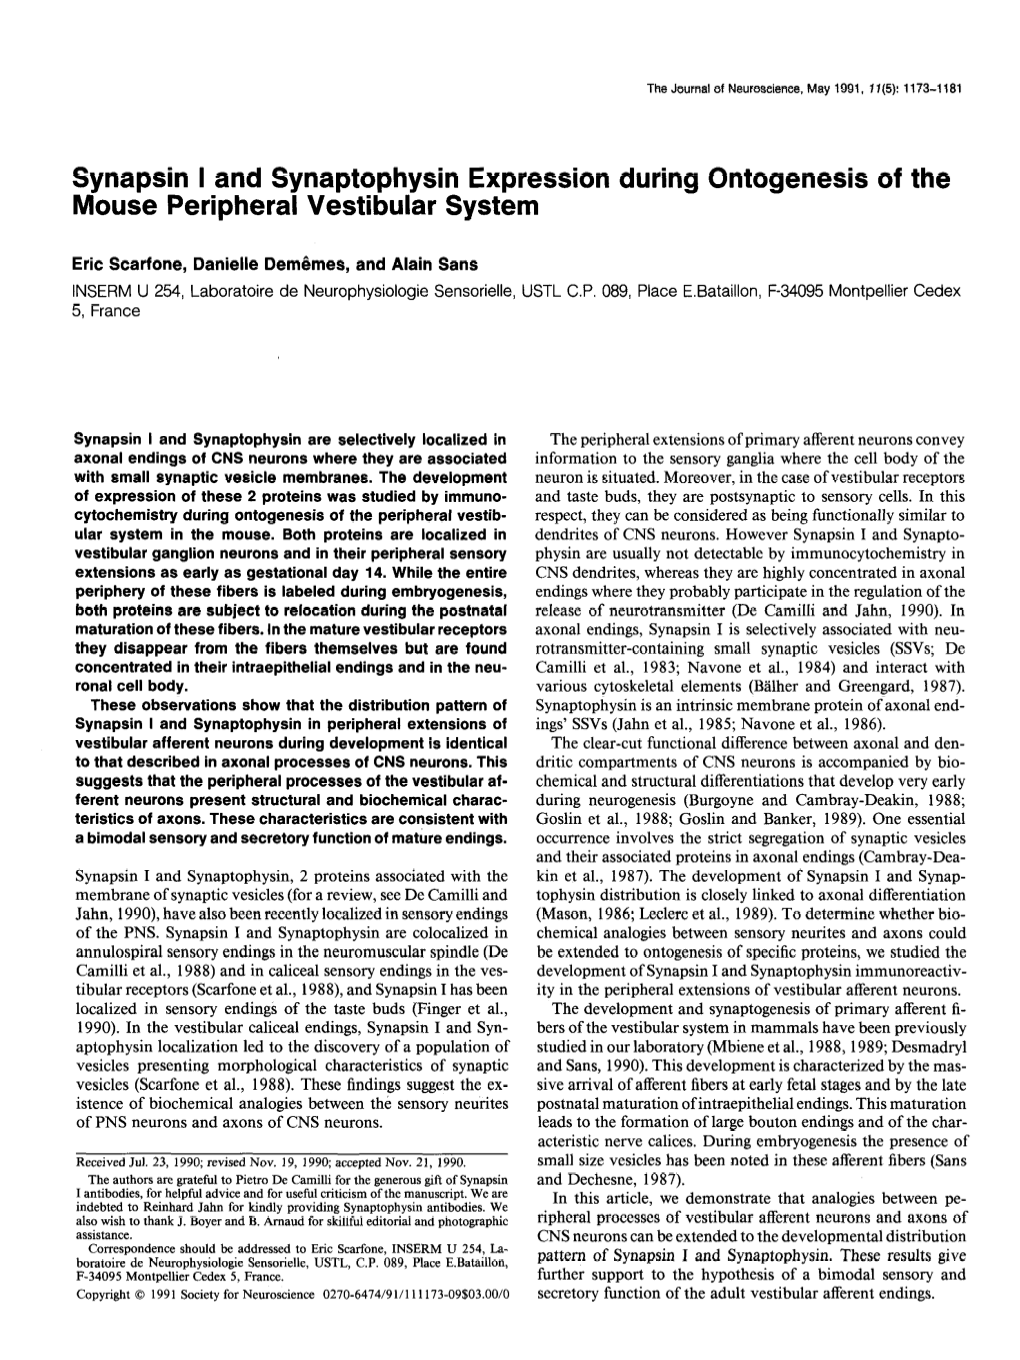 Synapsin I and Synaptophysin Expression During Ontogenesis of the Mouse Peripheral Vestibular System